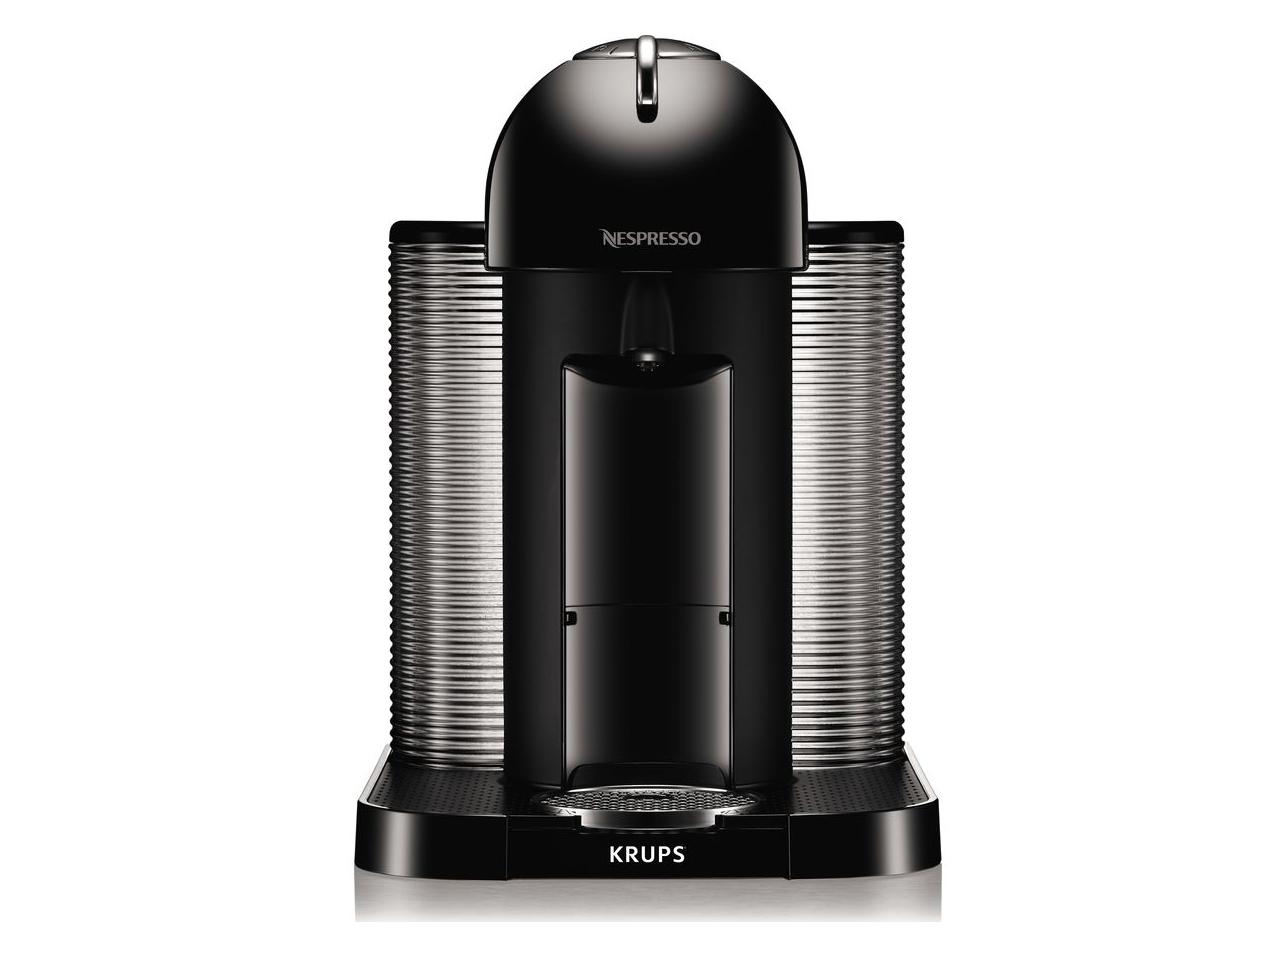 Best Nespresso pod coffee machines UK prices and reviews - Krups Nespresso vertuo